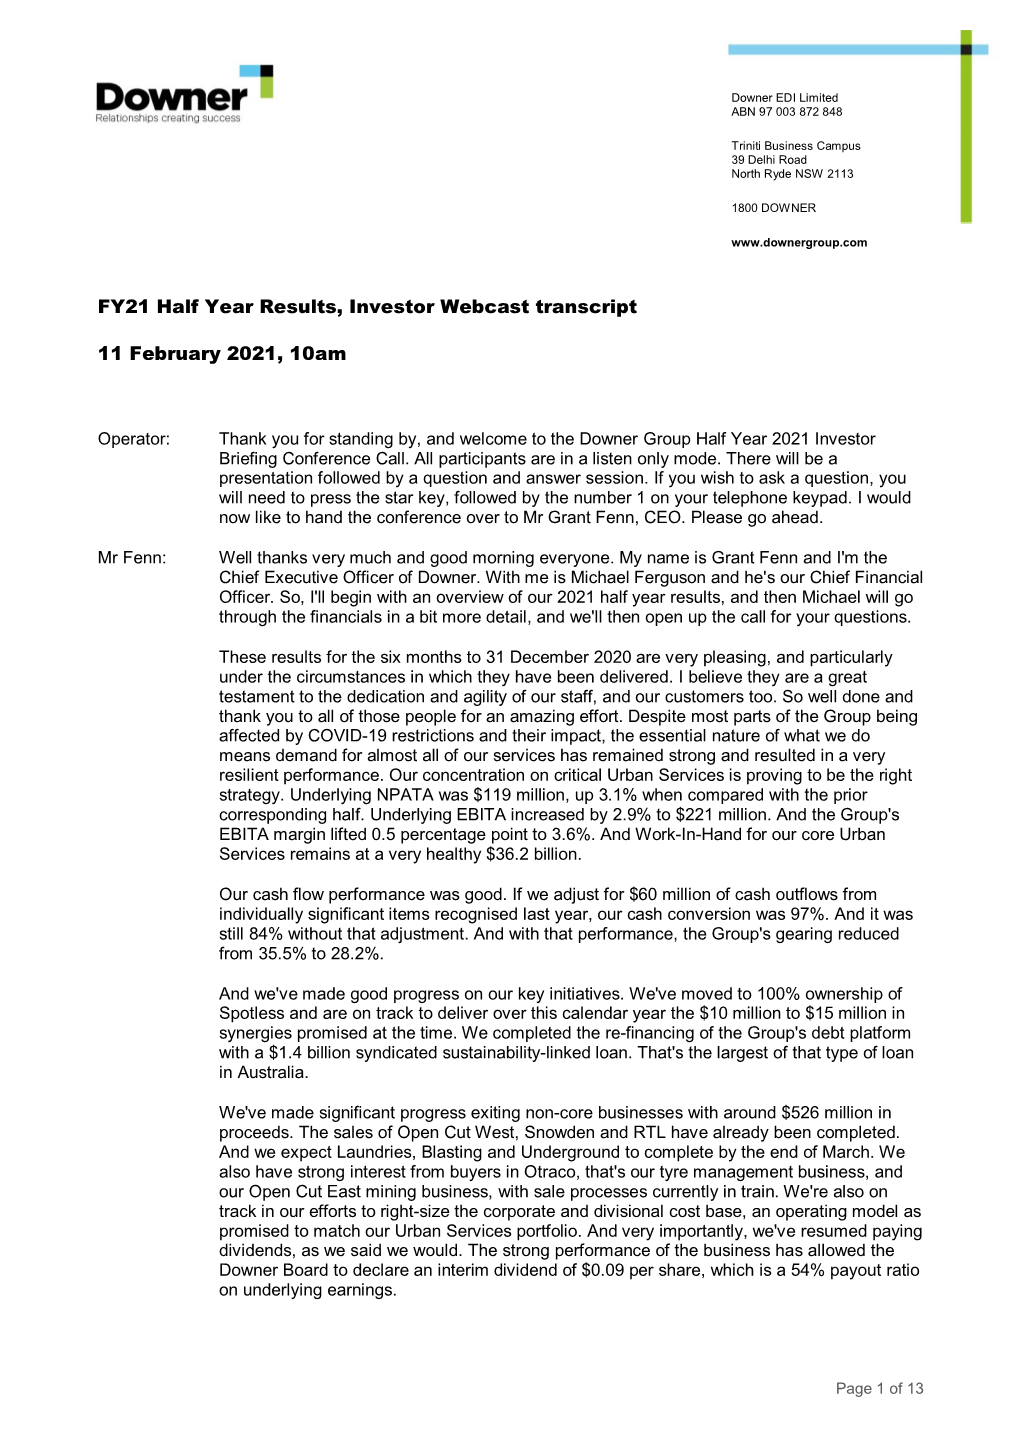 FY21 Half Year Results, Investor Webcast Transcript 11 February 2021, 10Am